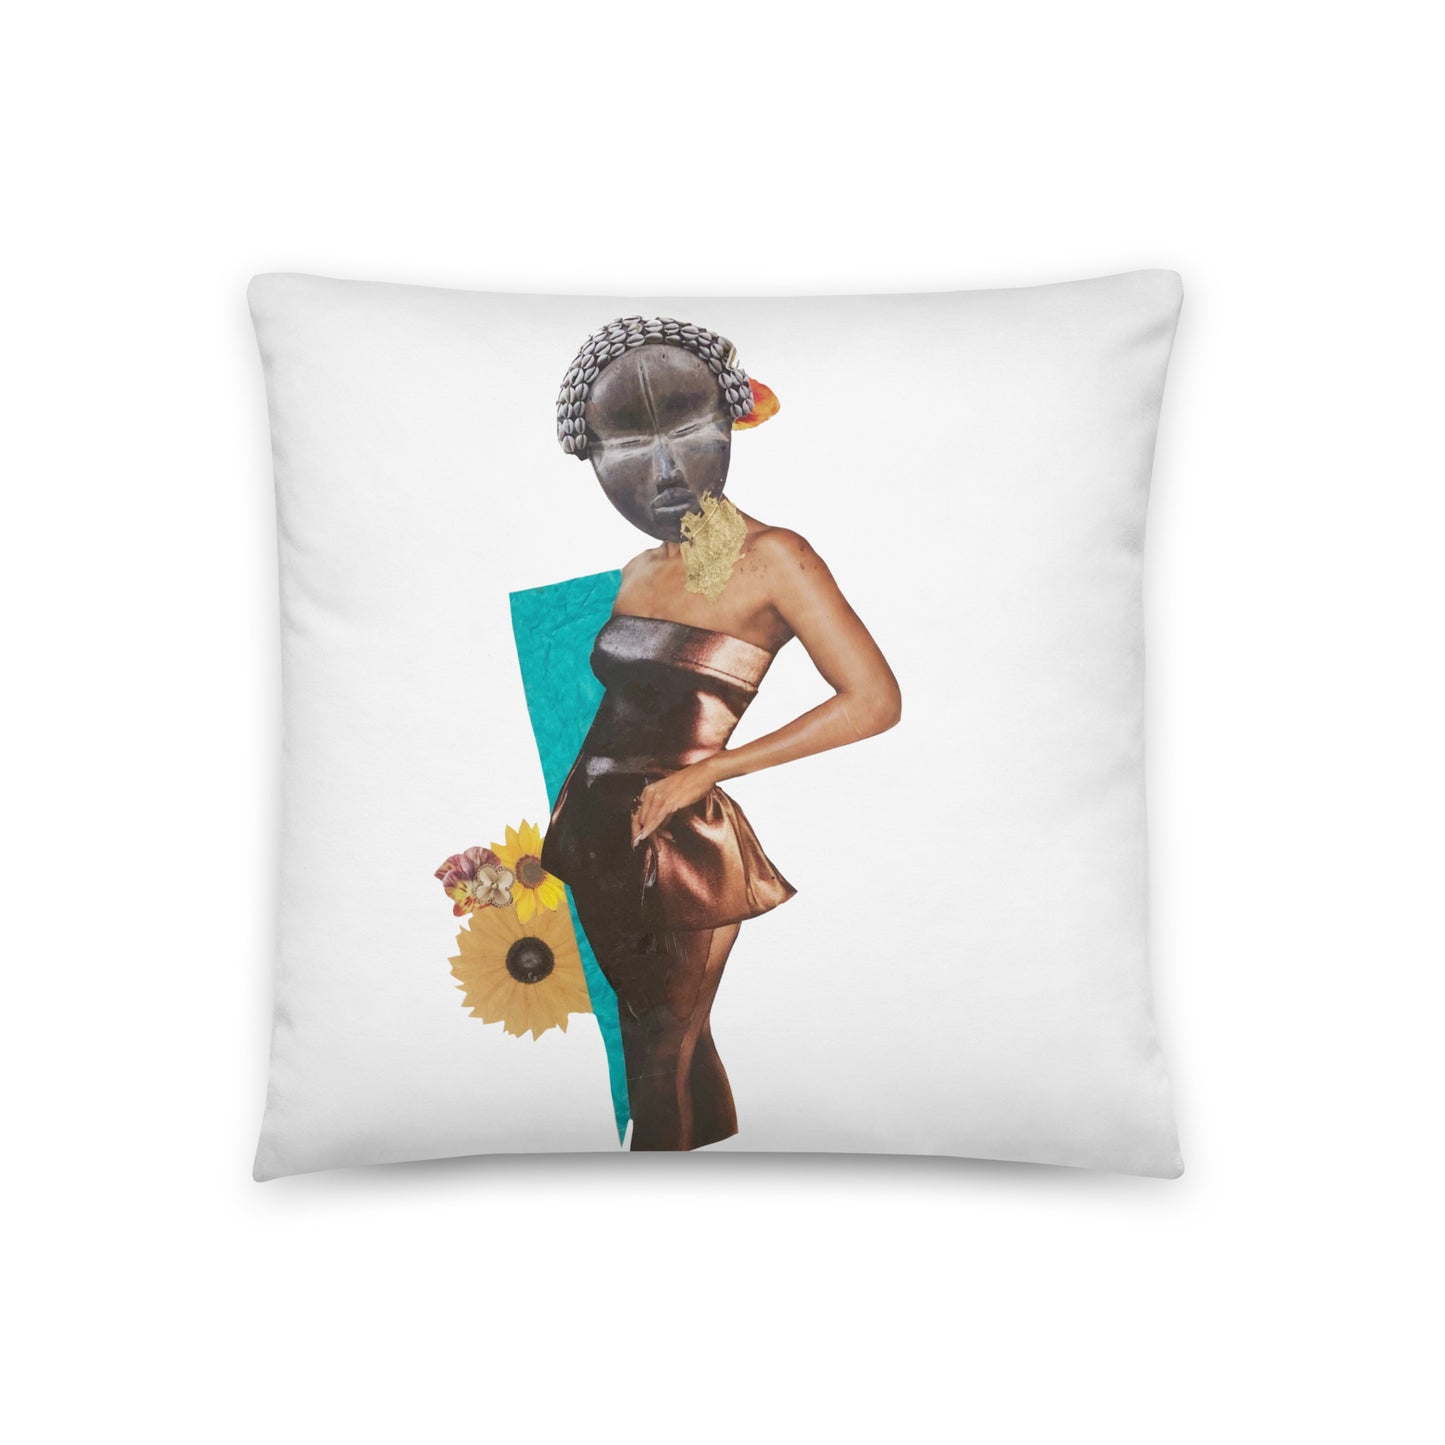 Shantae Pillow